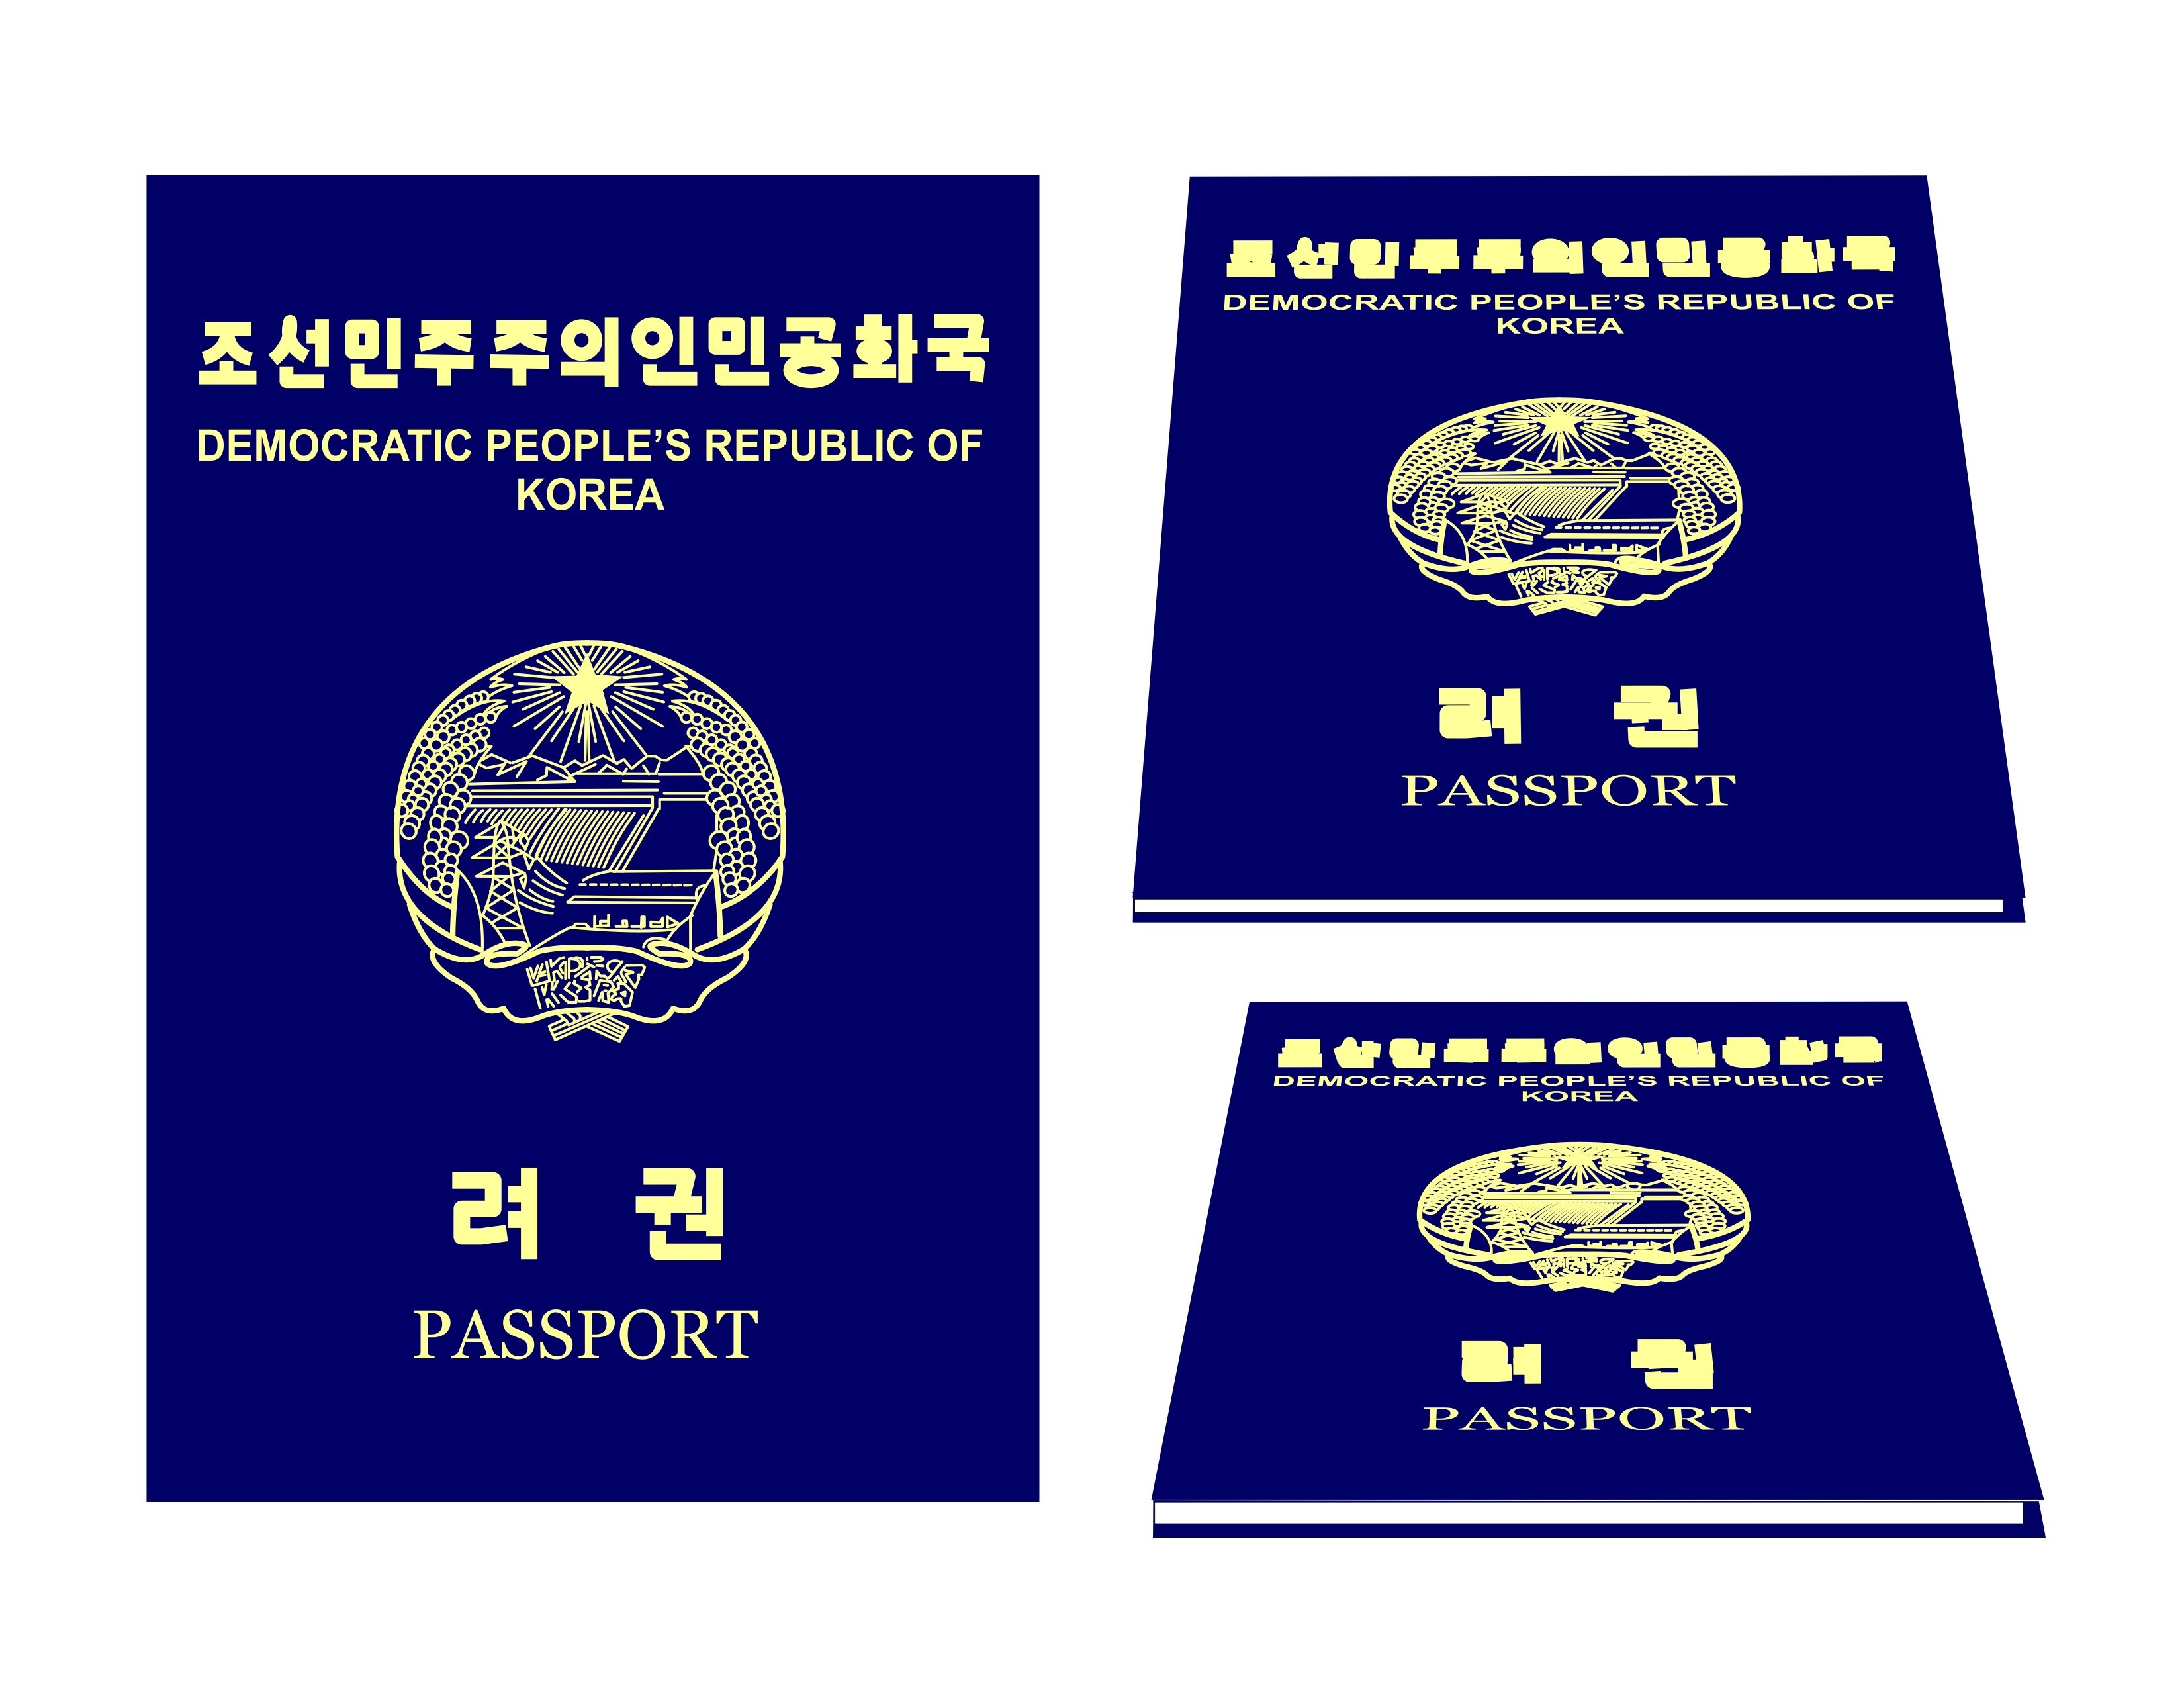 An illustration of a North Korean Passport